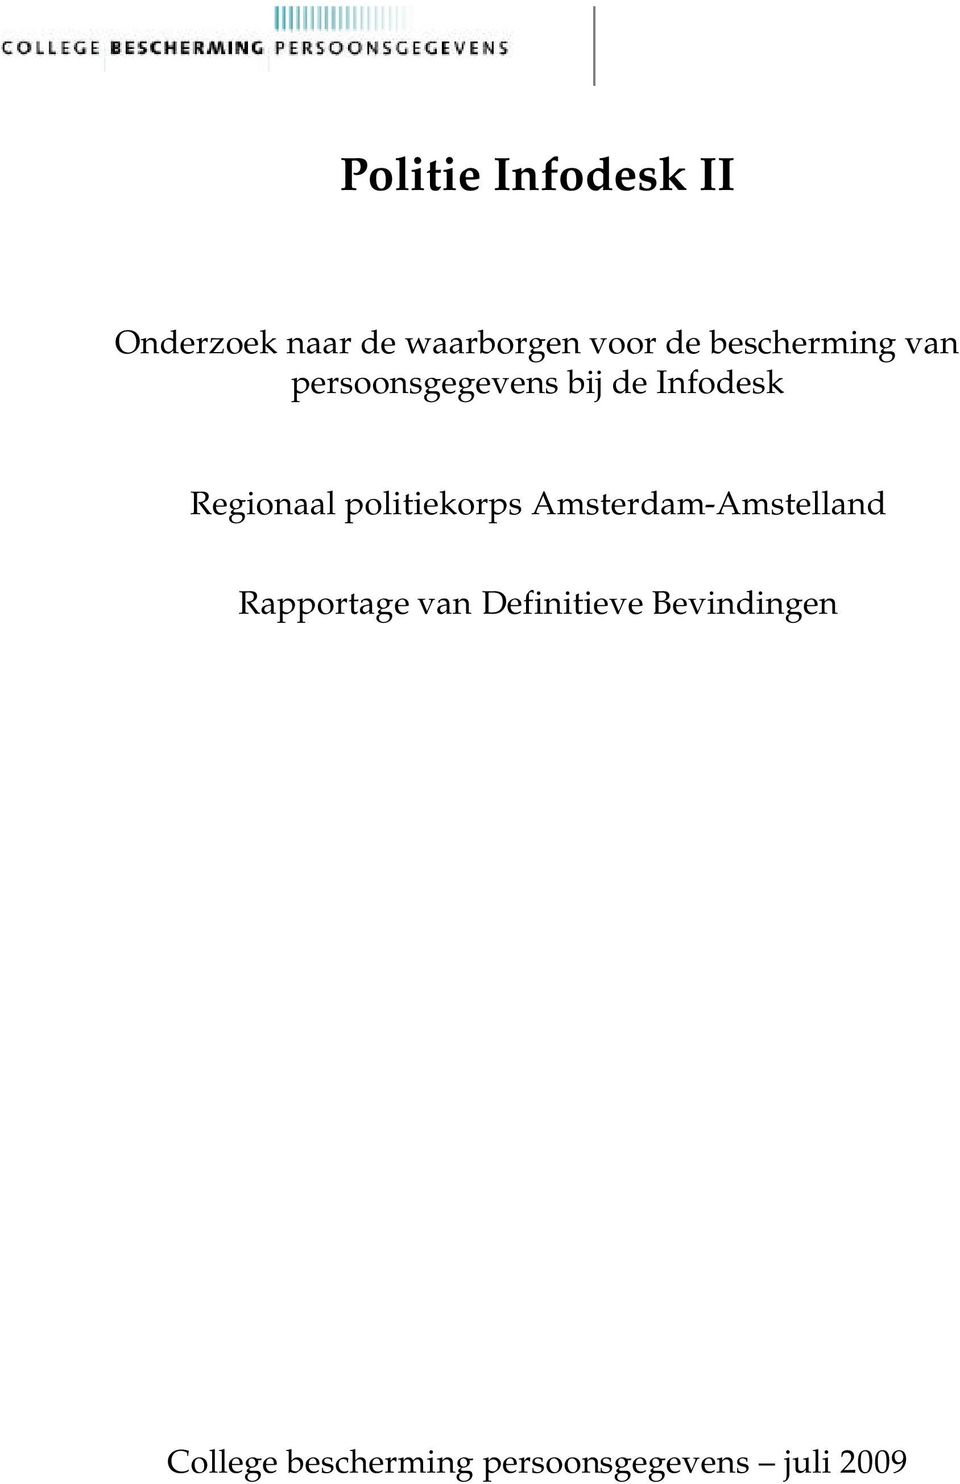 politiekorps Amsterdam-Amstelland Rapportage van